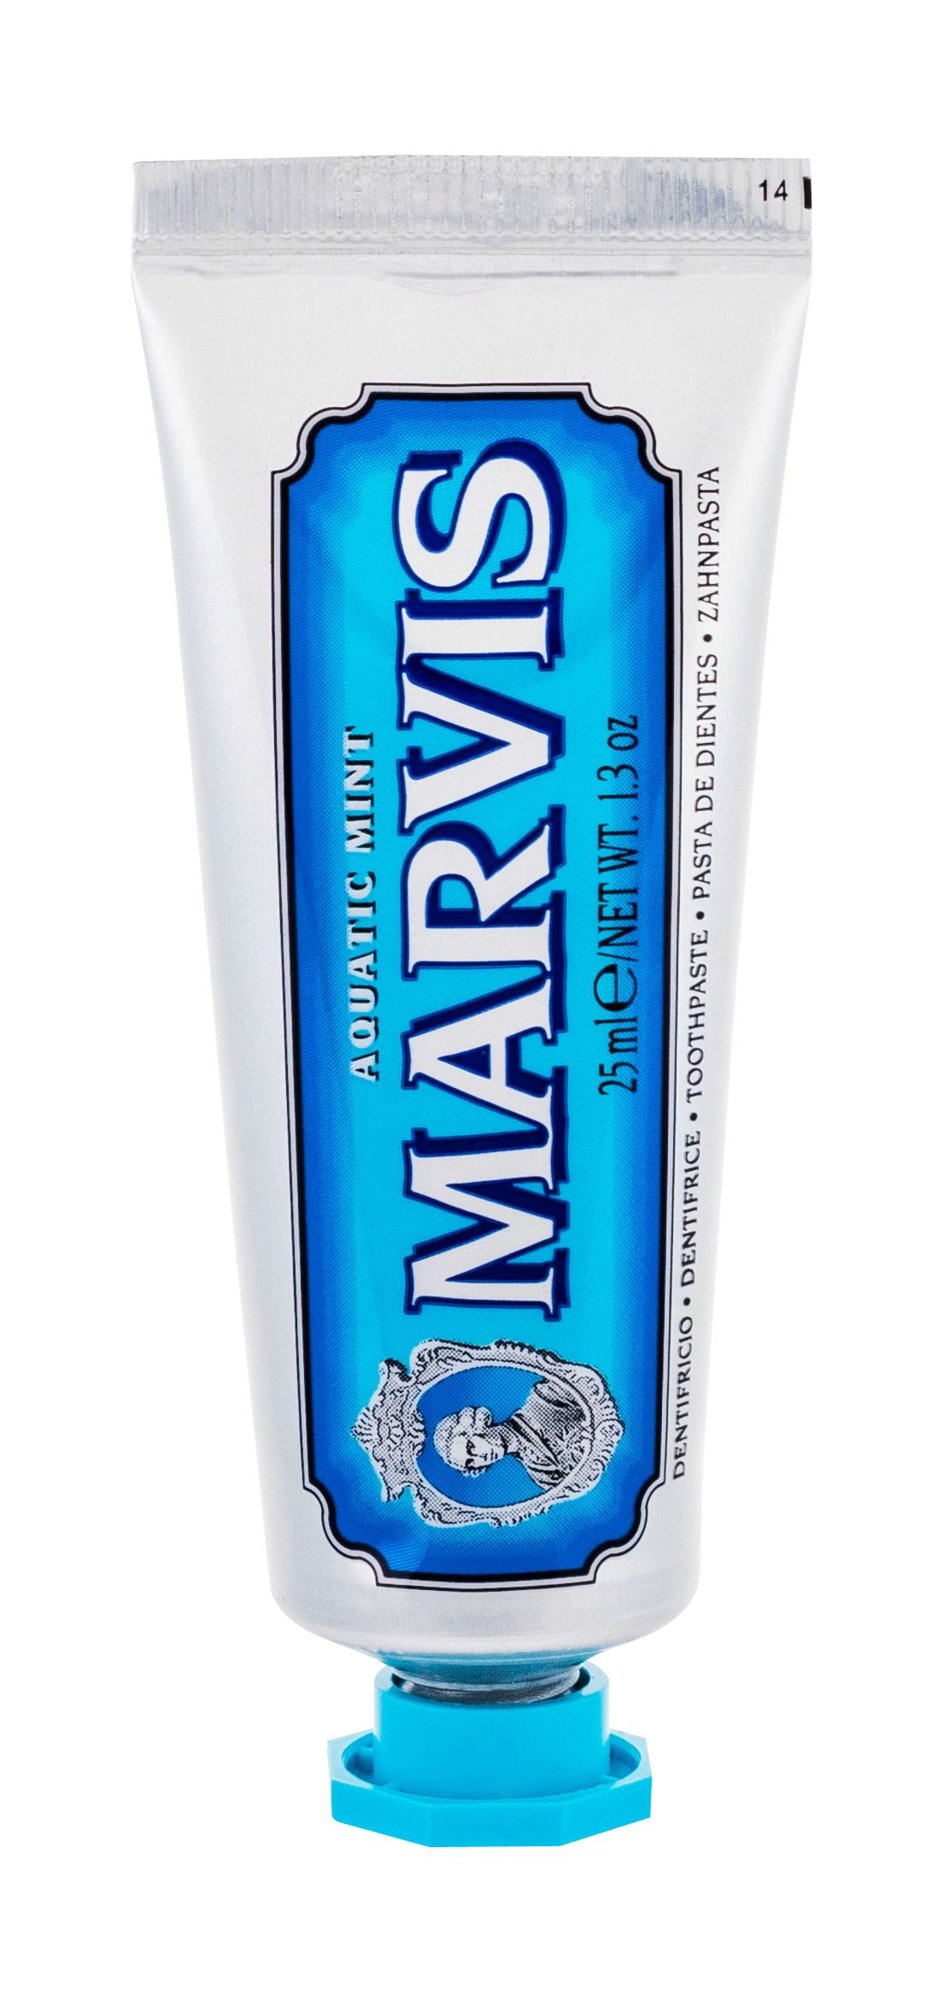 Marvis Toothpaste Aquatic Mint